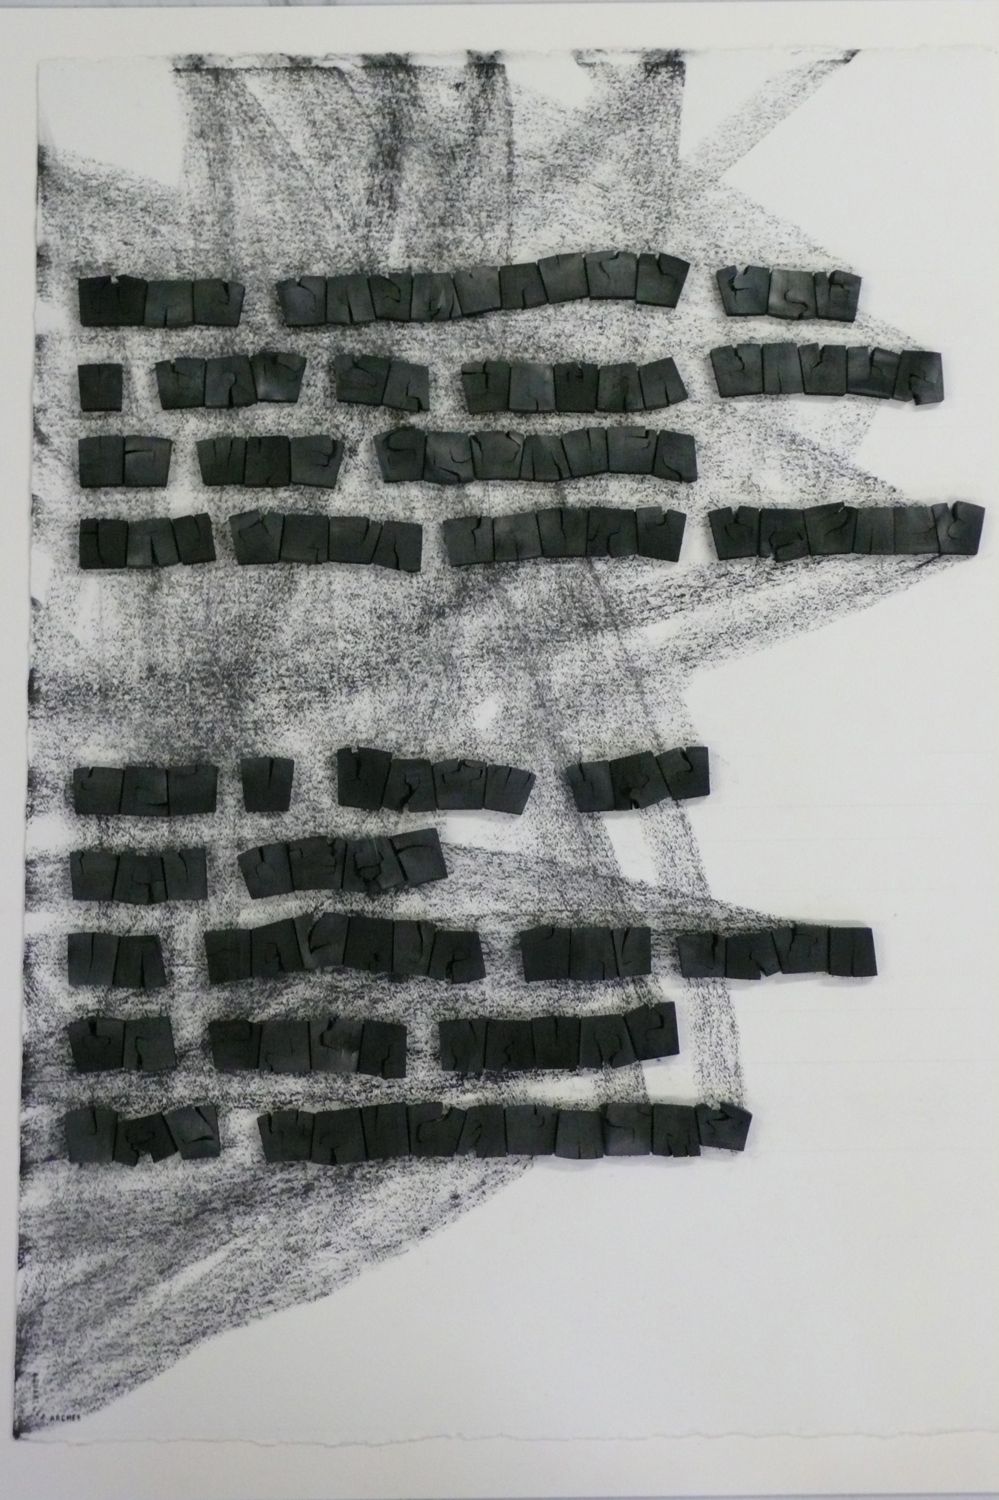 Blackbird, 45-1-2"x34-1/2", charcoal on paper